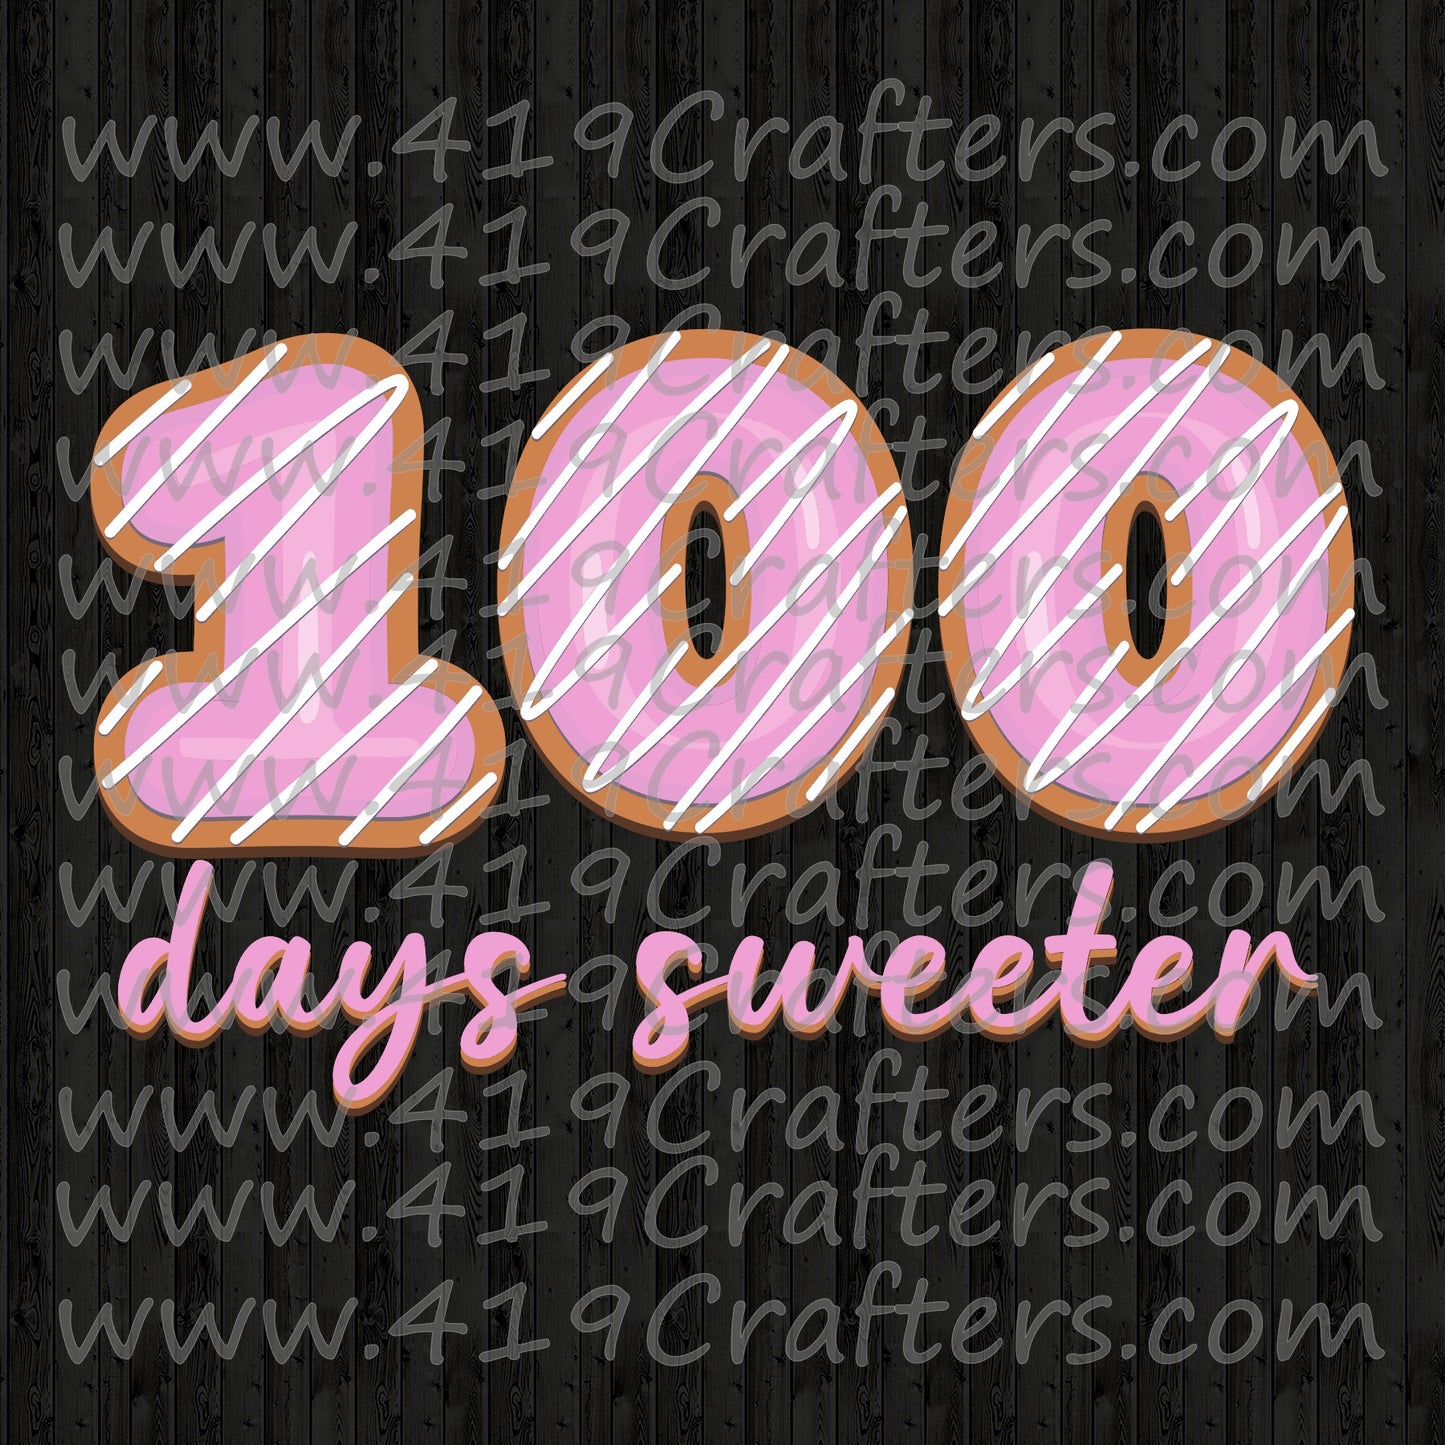 100 DAYS SWEETER